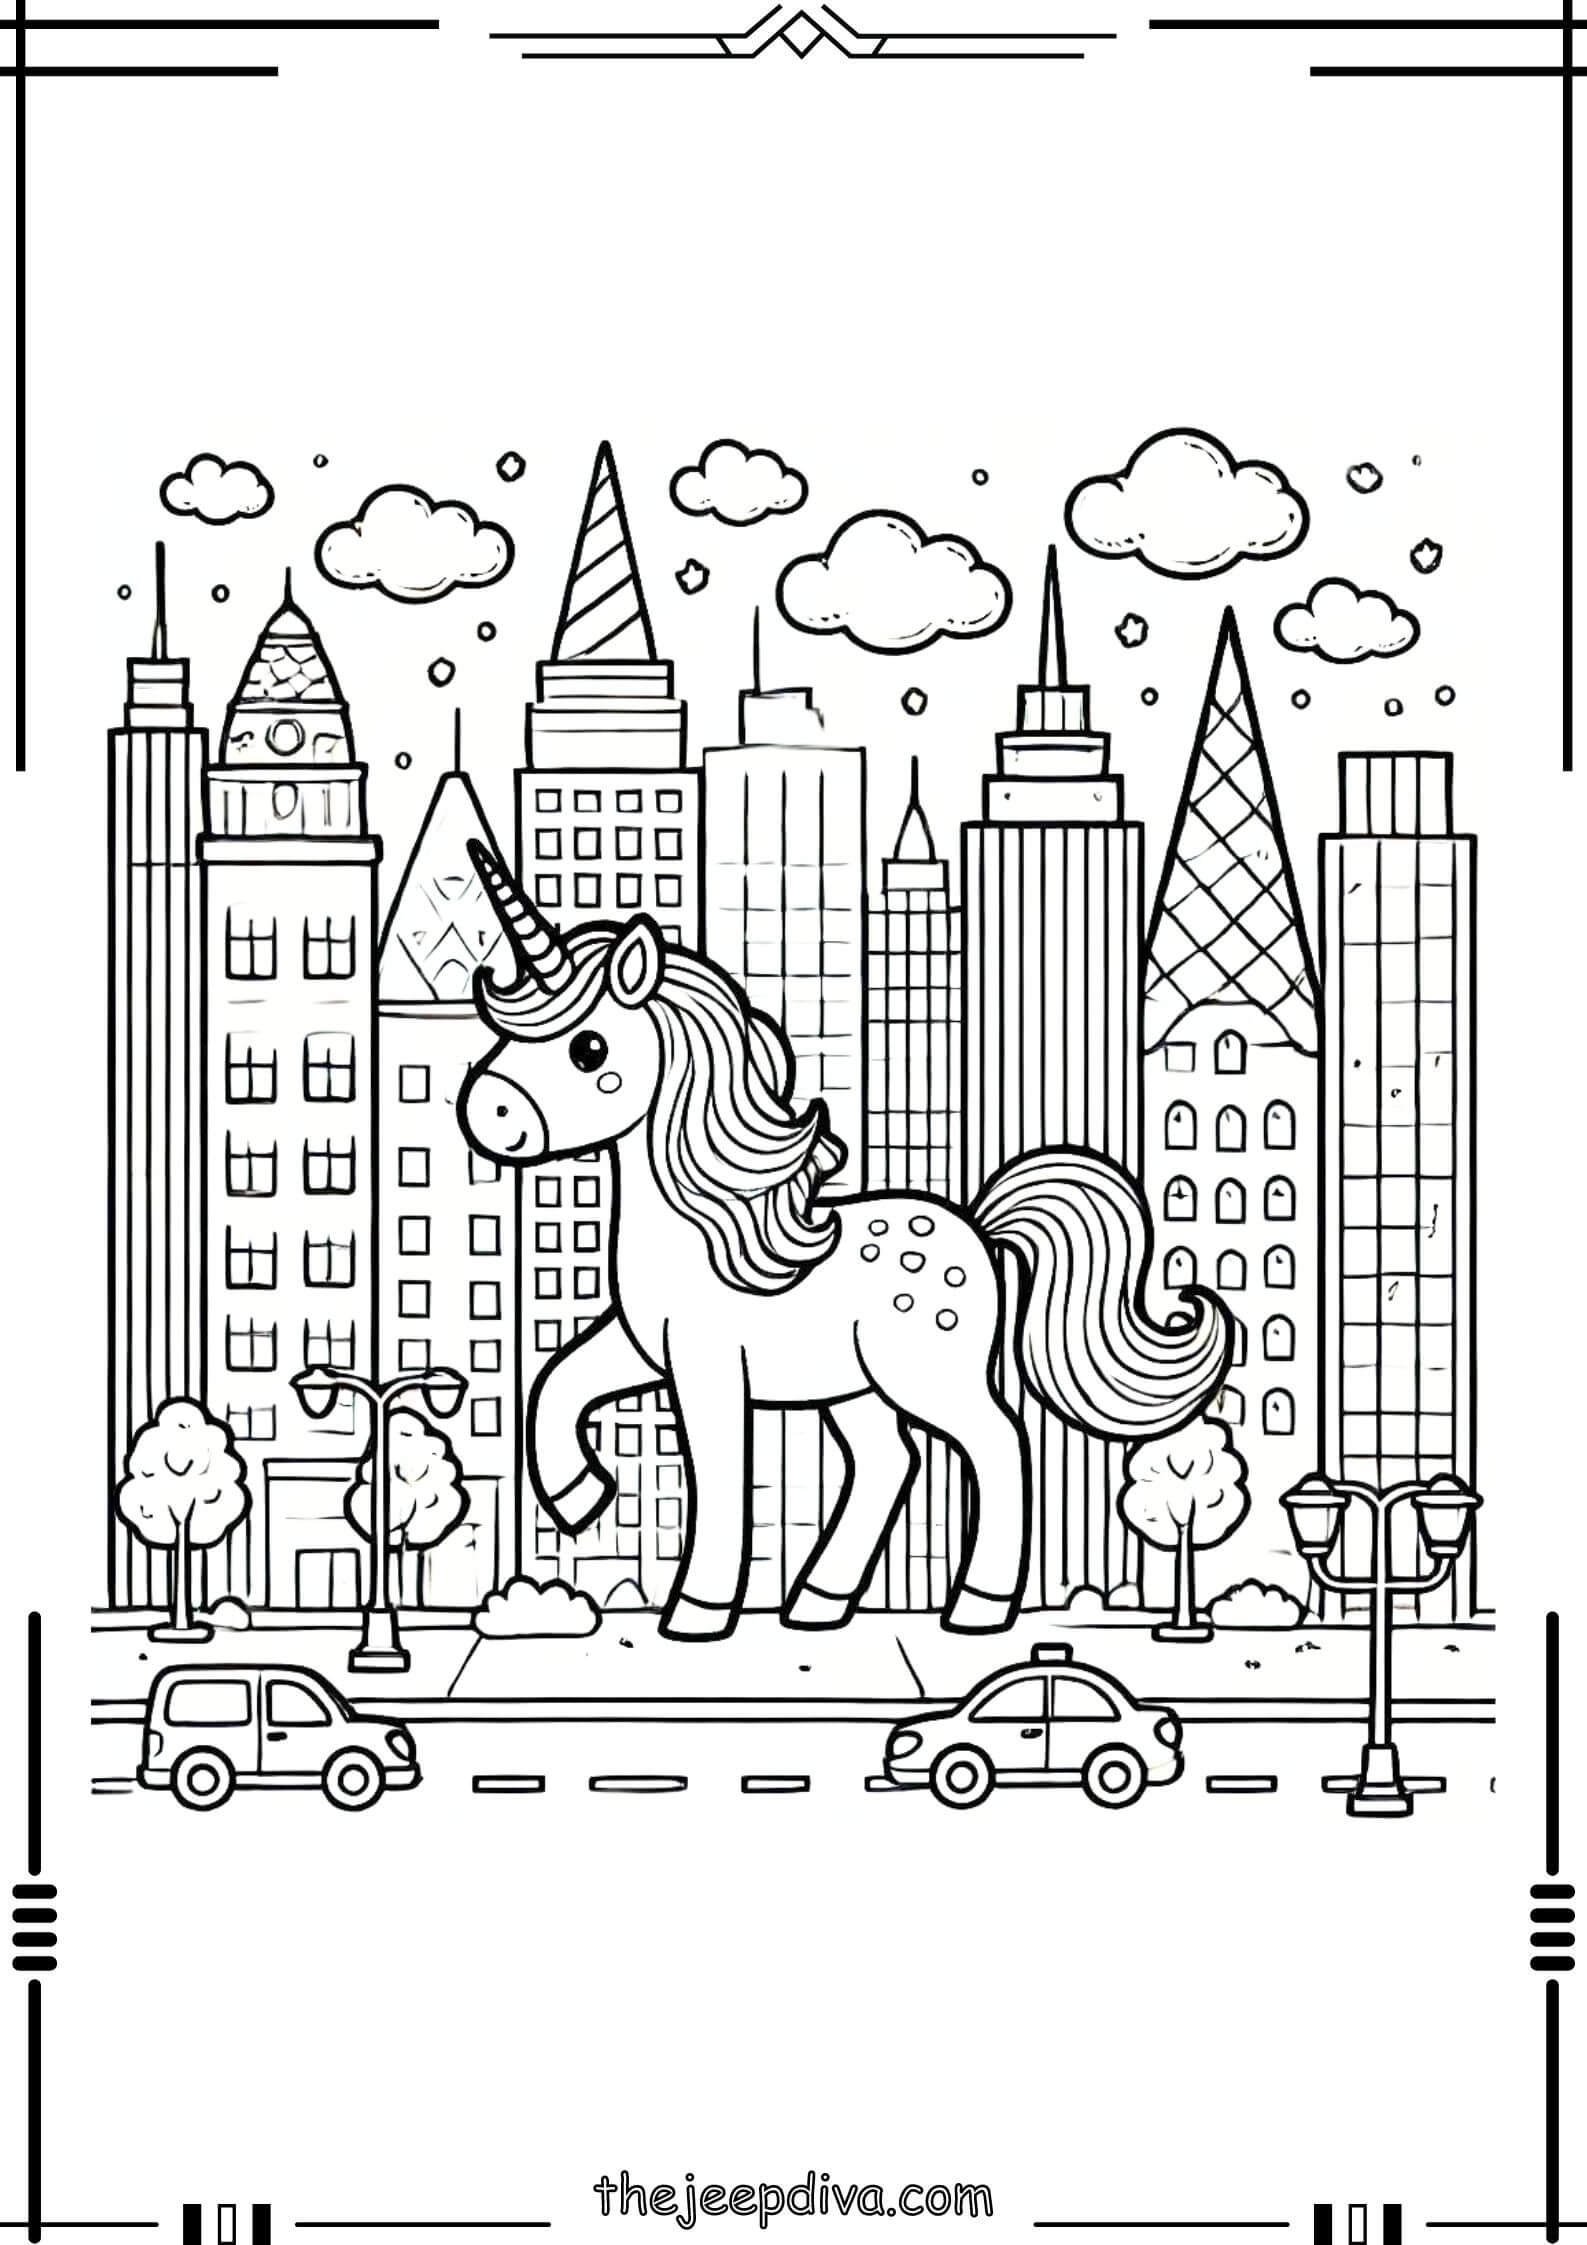 unicorn-coloring-page-medium-7